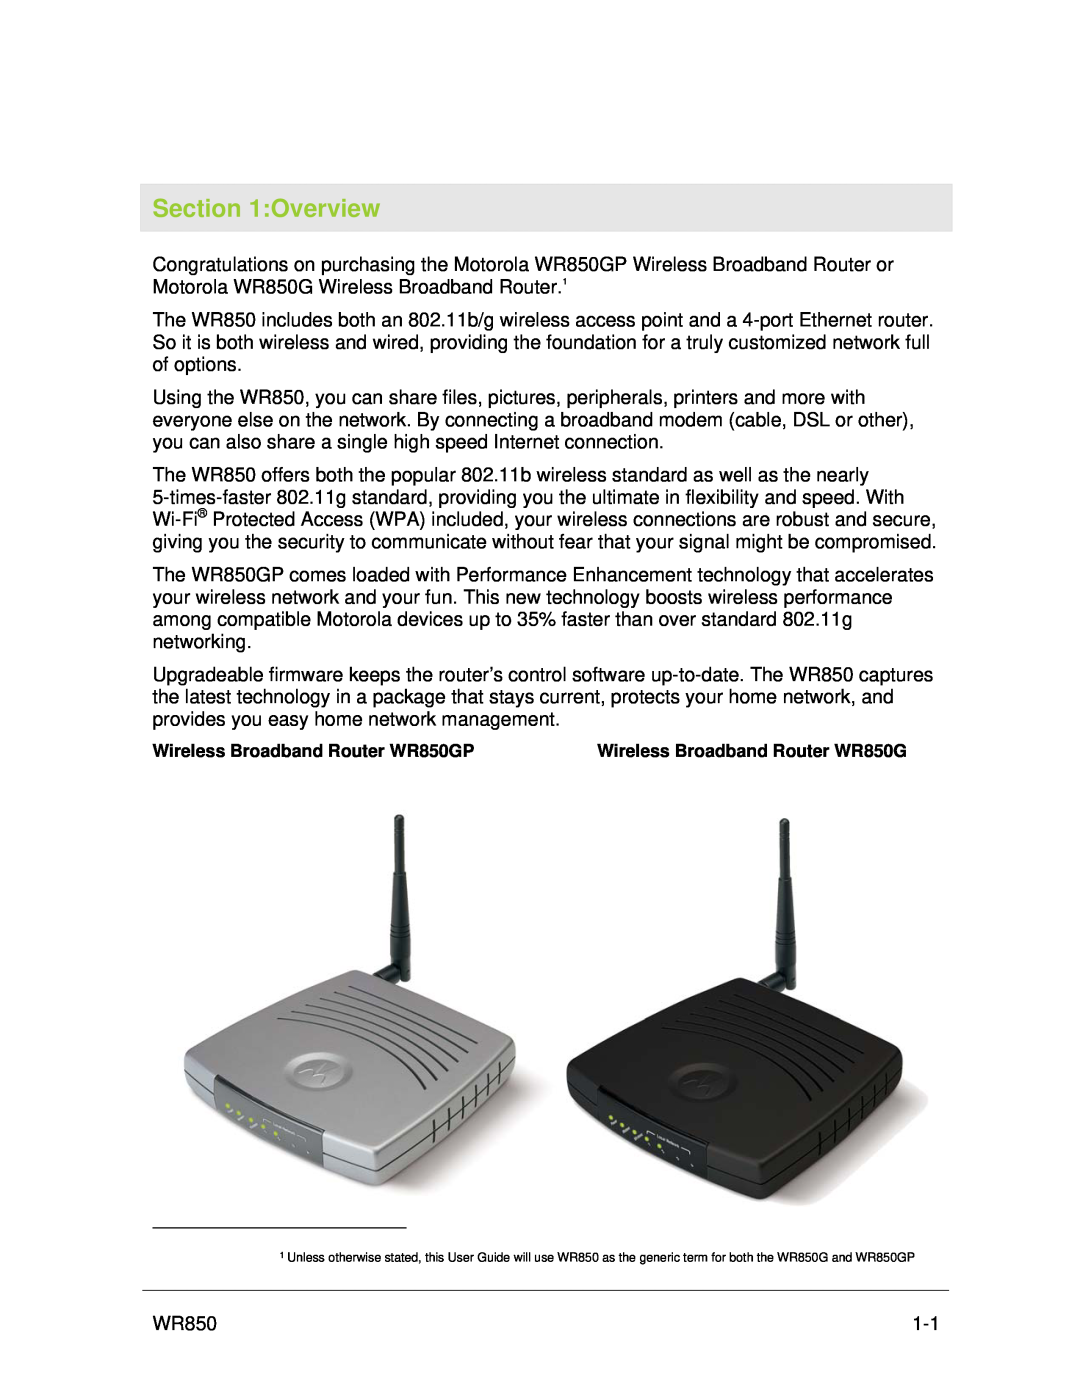 Motorola manual Overview, Wireless Broadband Router WR850GP 